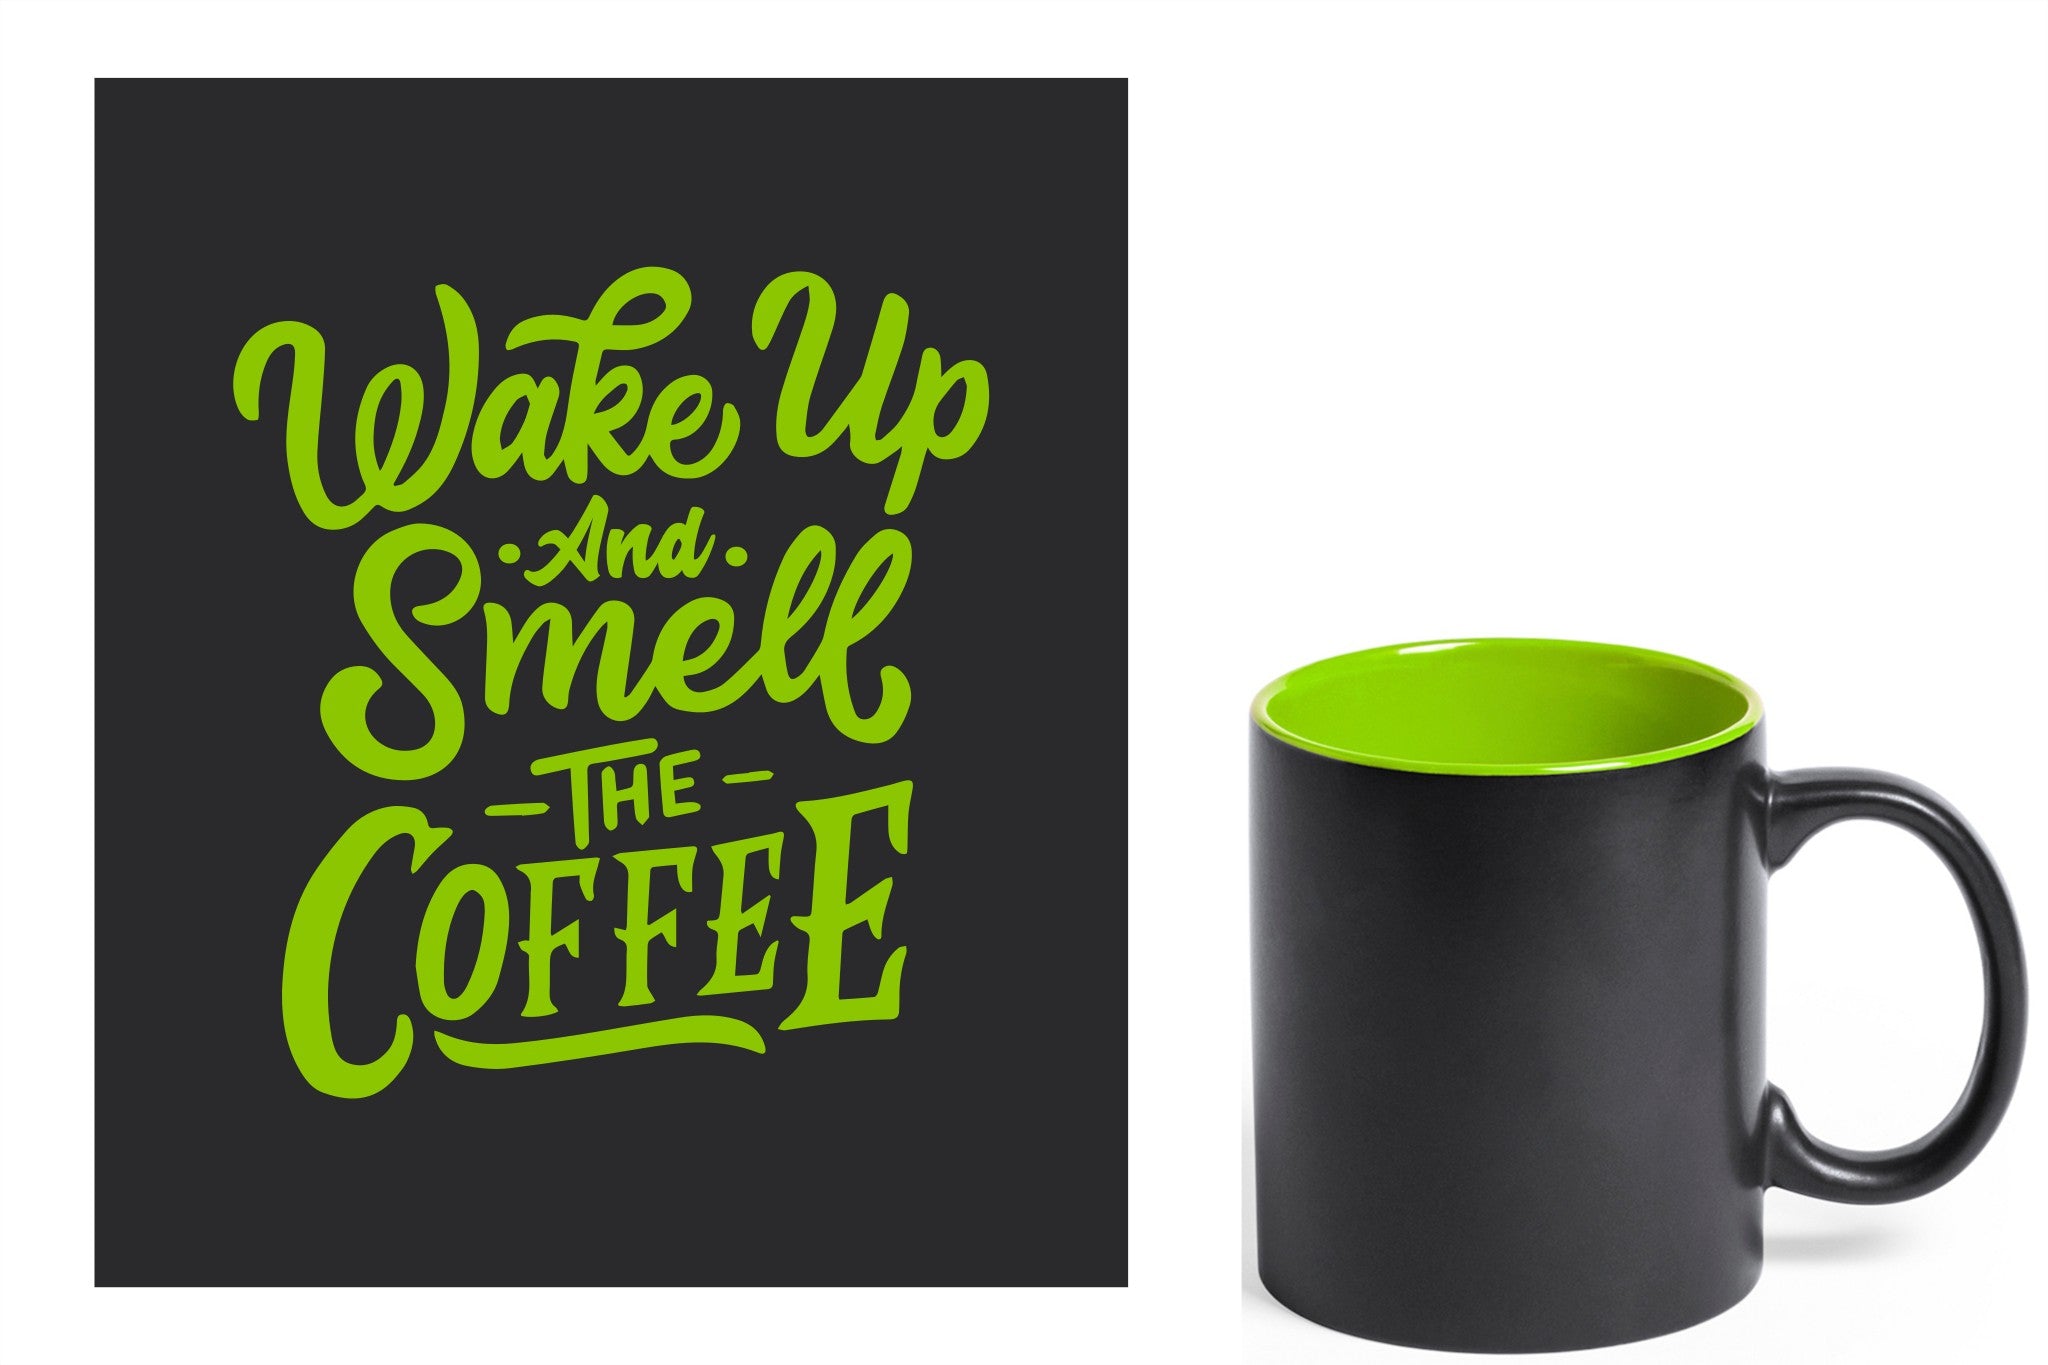 zwarte keramische mok met groene gravure  'Wake up and smell the coffee'.